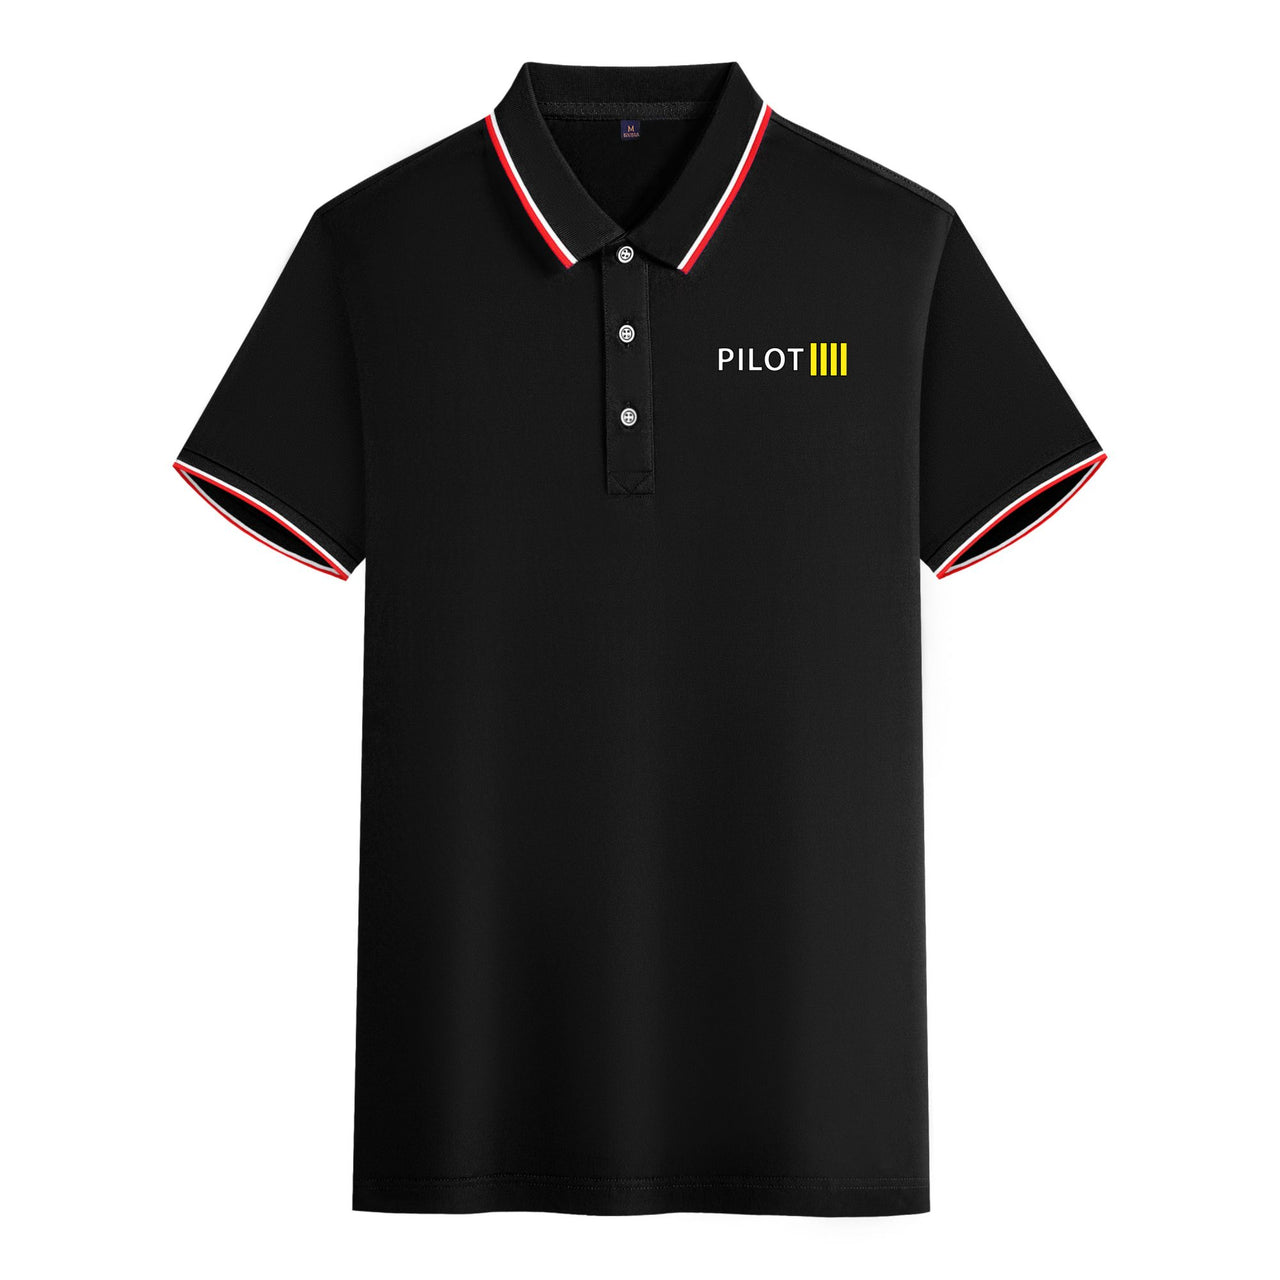 Pilot & Stripes (4 Lines) Designed Stylish Polo T-Shirts